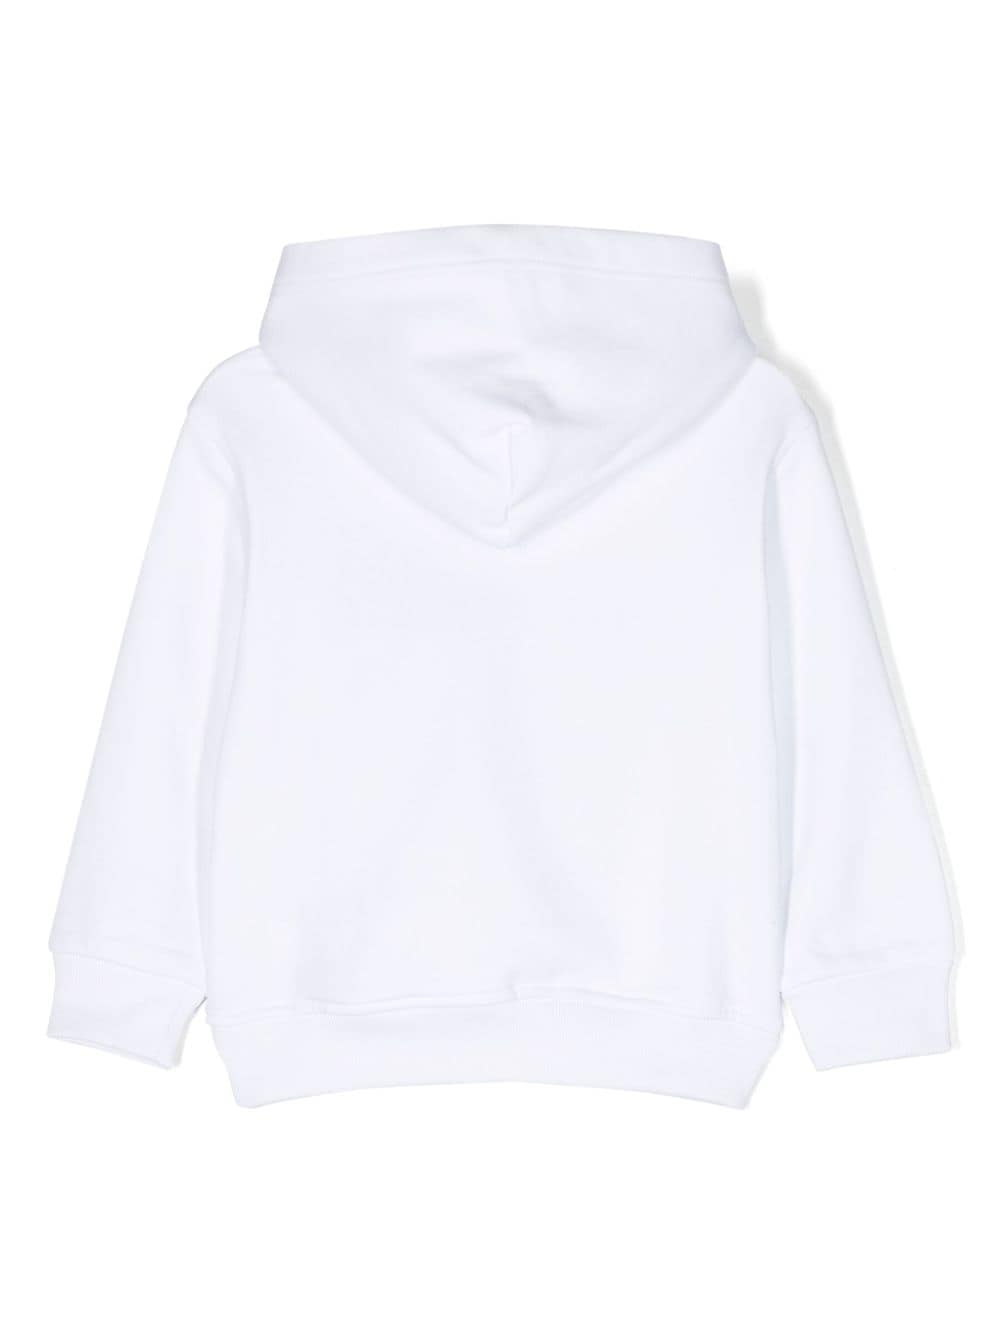 White hooded sweatshirt for boys